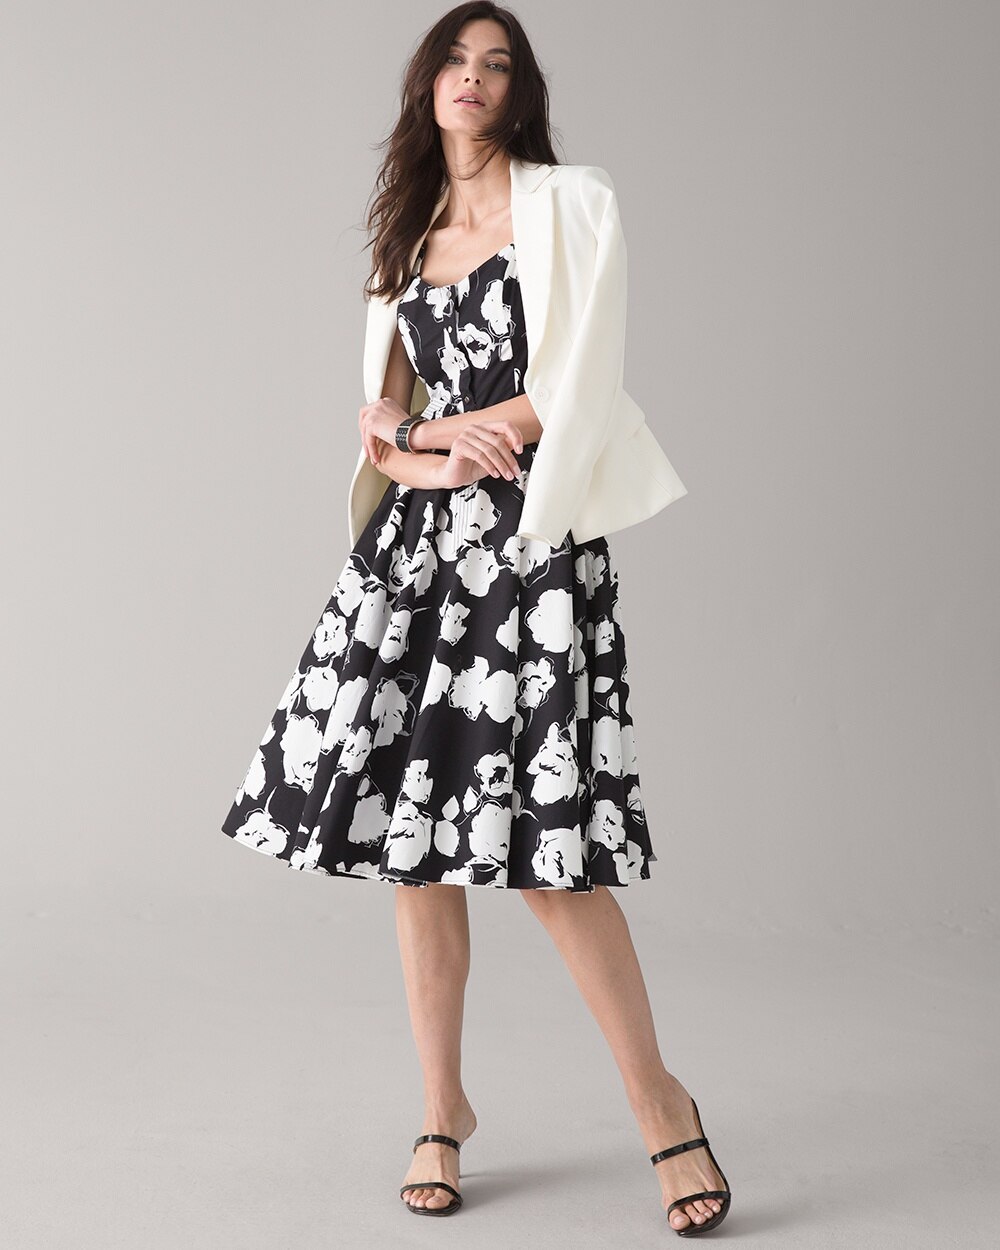 White + Black Fit & Flare Floral Dress